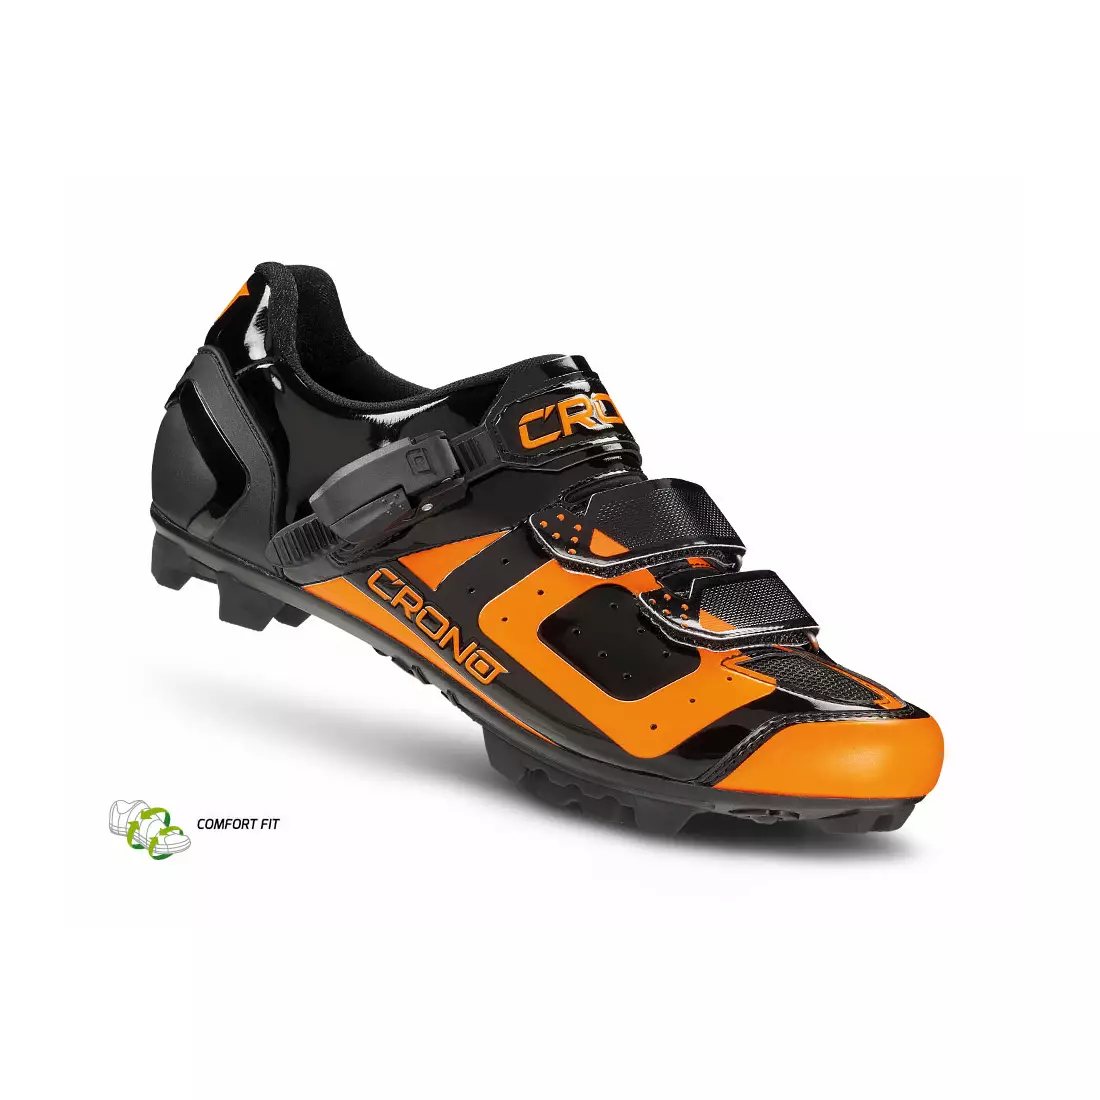 CRONO CX3 nylon - MTB cycling shoes, black and orange fluo